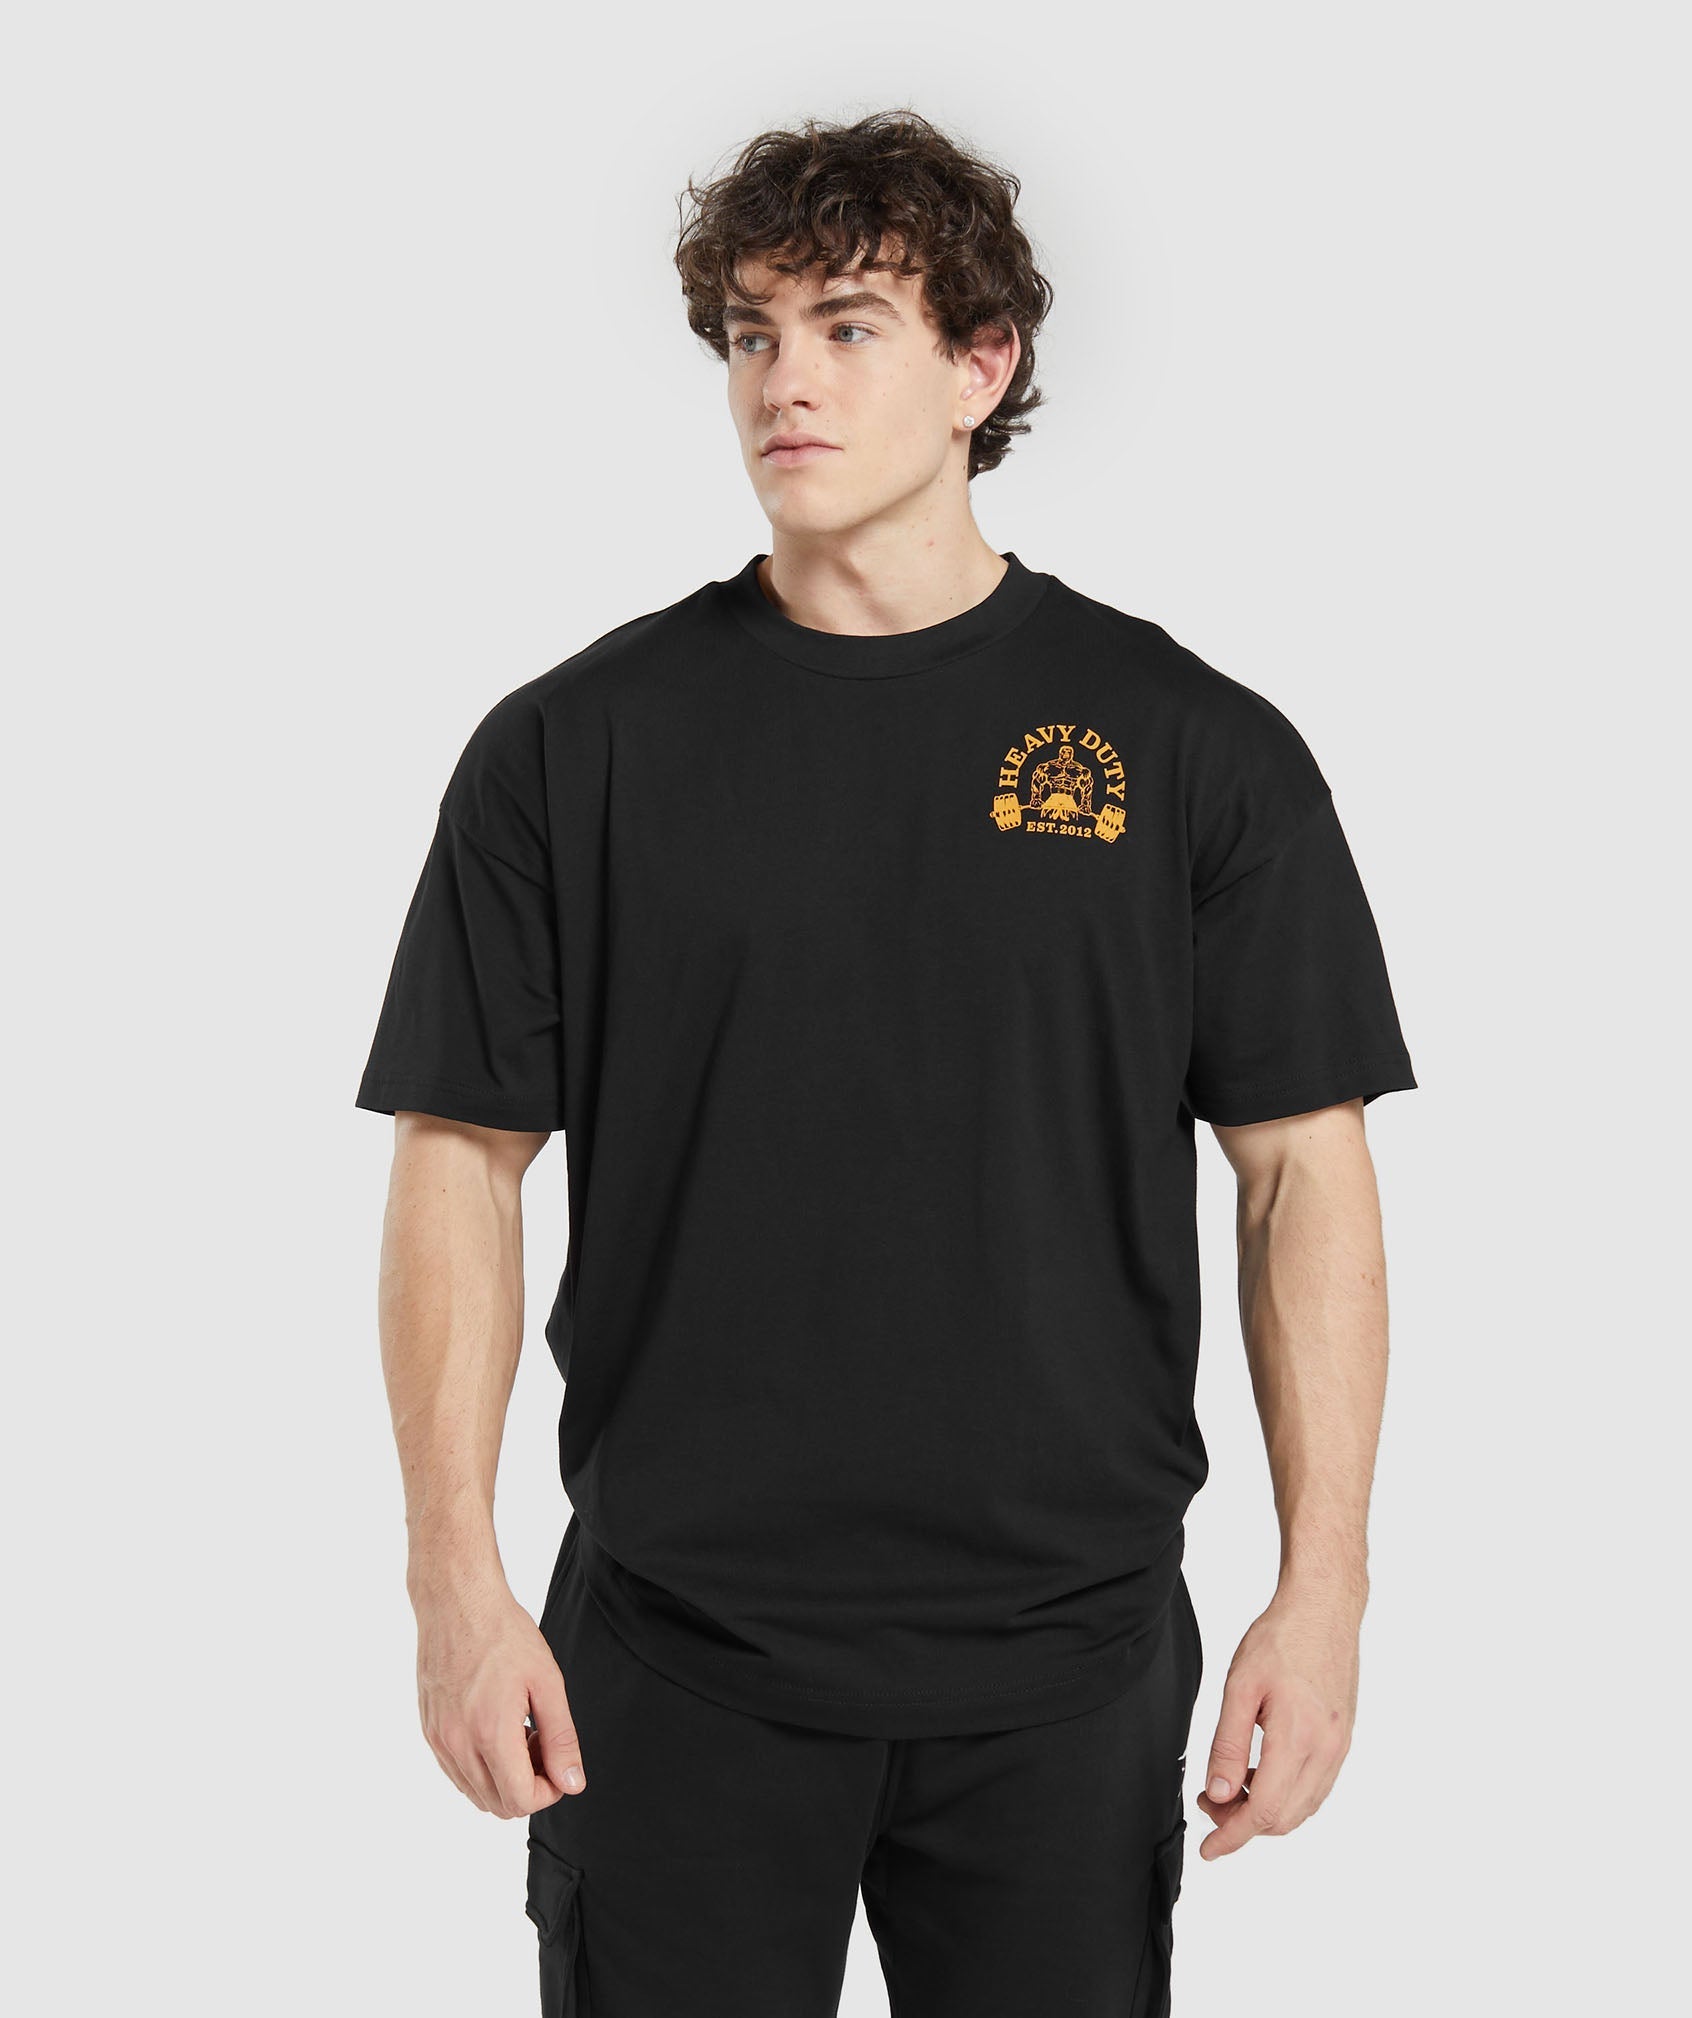 Gymshark Heavy Duty T-Shirt - Black